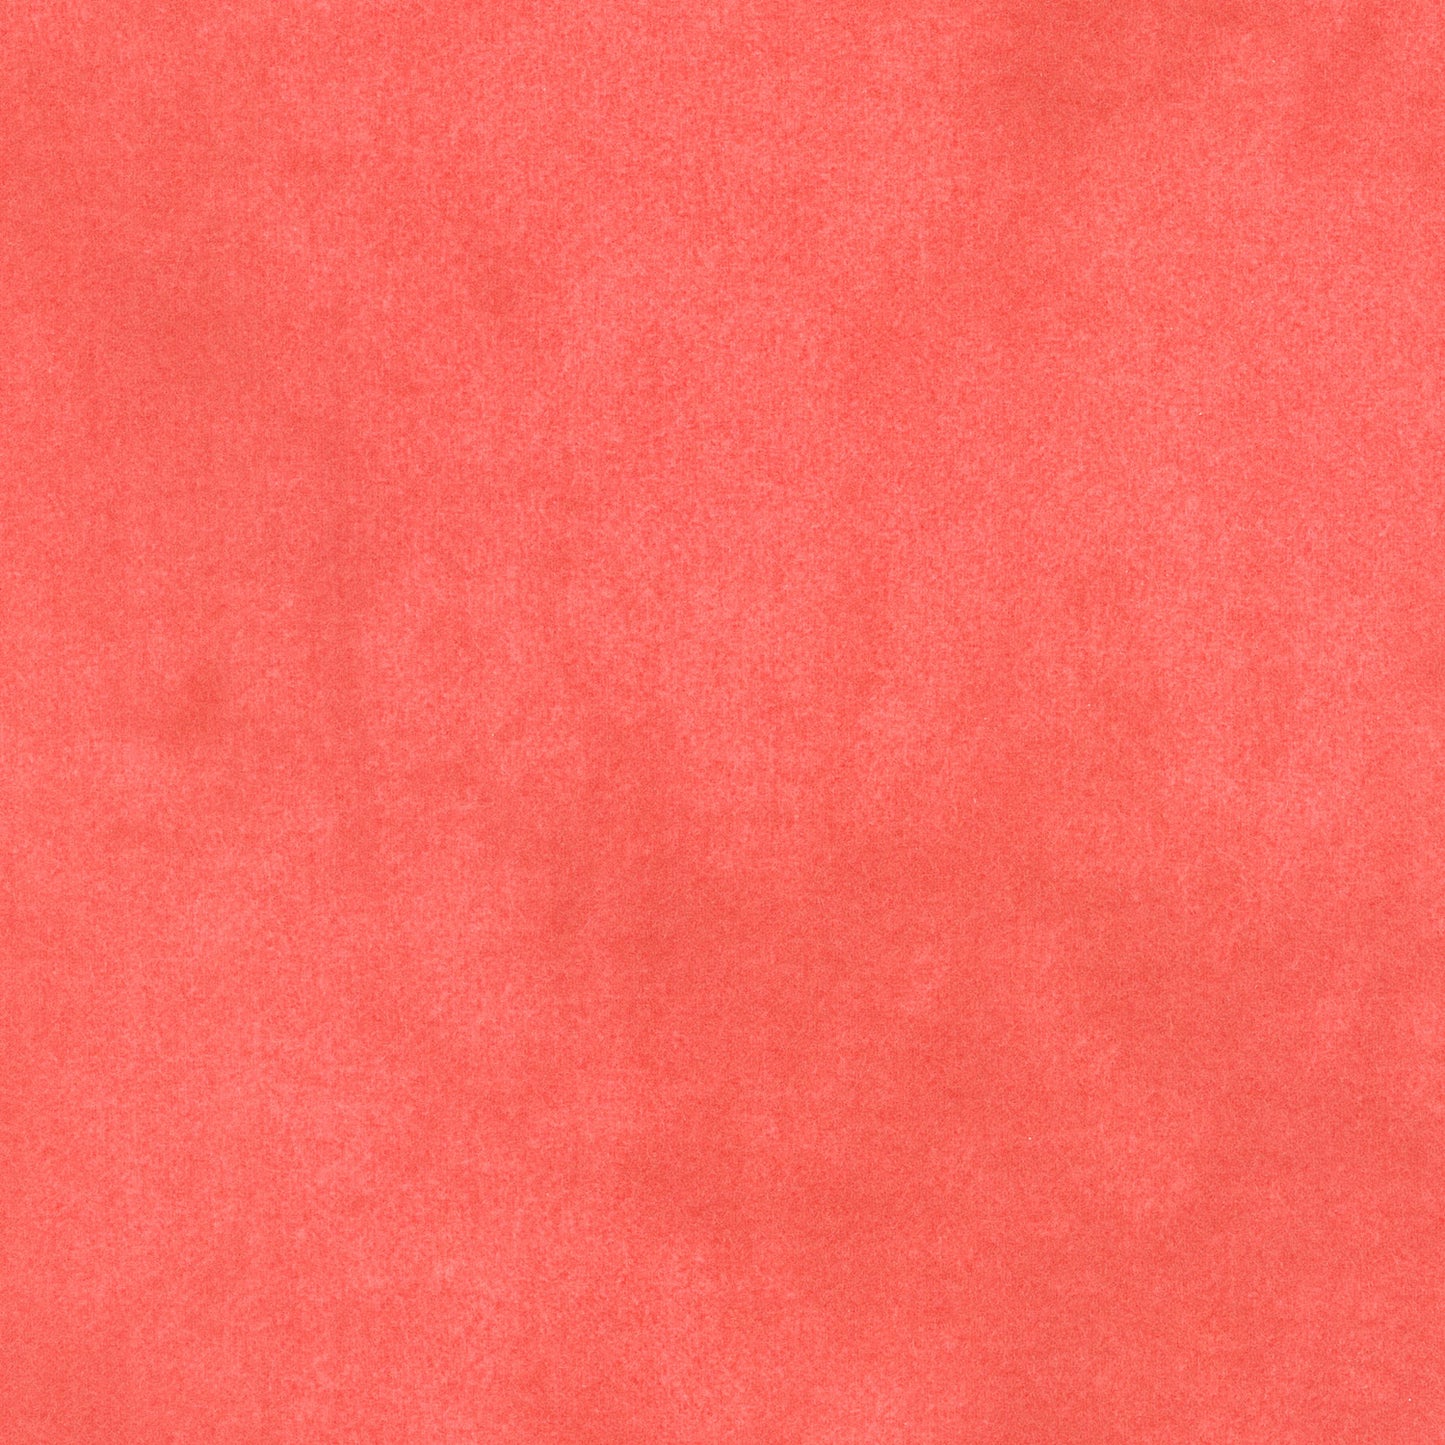 Woolies Flannel - Colorwash - Light Red Yardage Primary Image